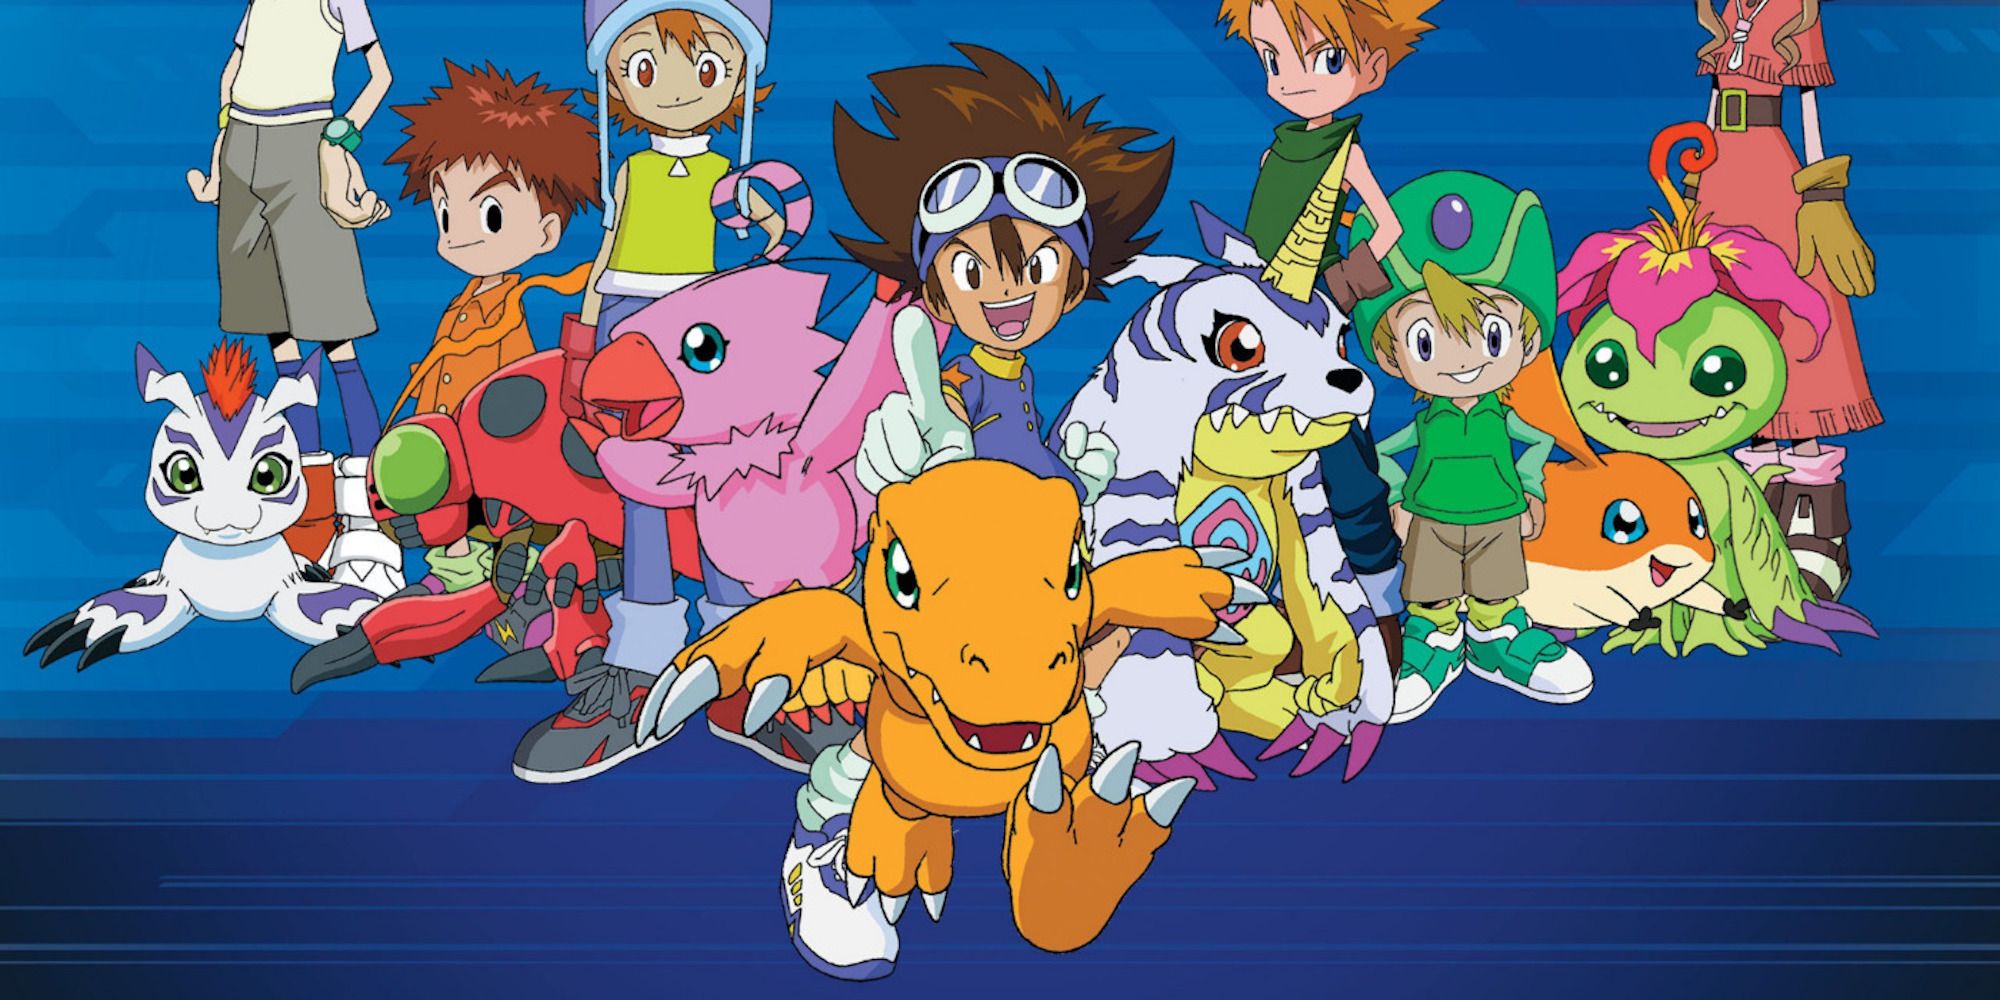 arte promocional con personajes de Digimon